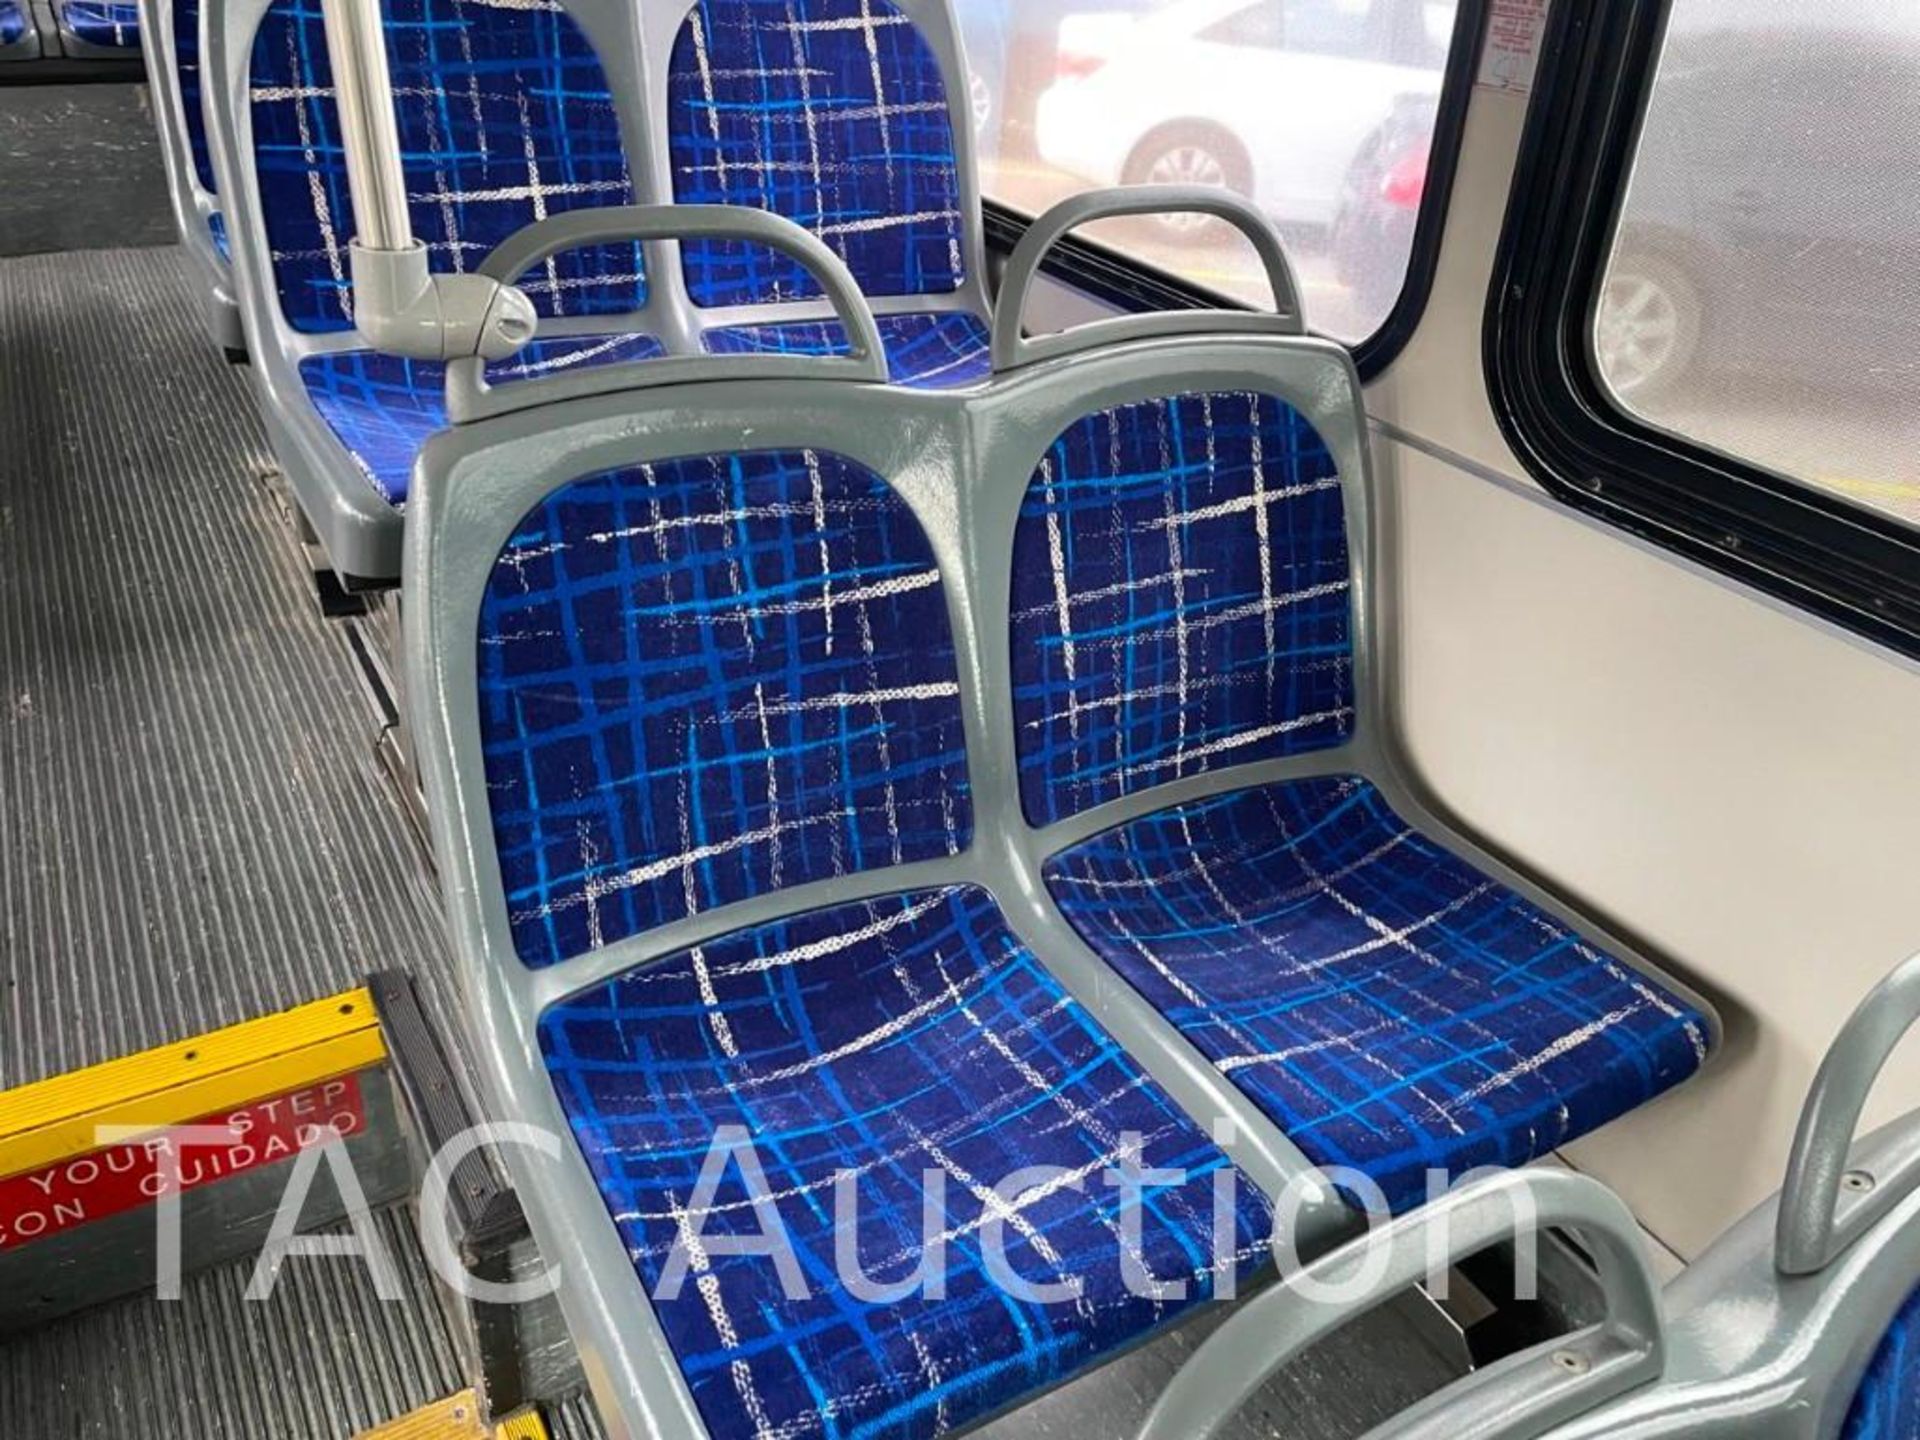 2005 Gillig Low Floor (40) Passenger Coach Transit Bus - Image 46 of 91